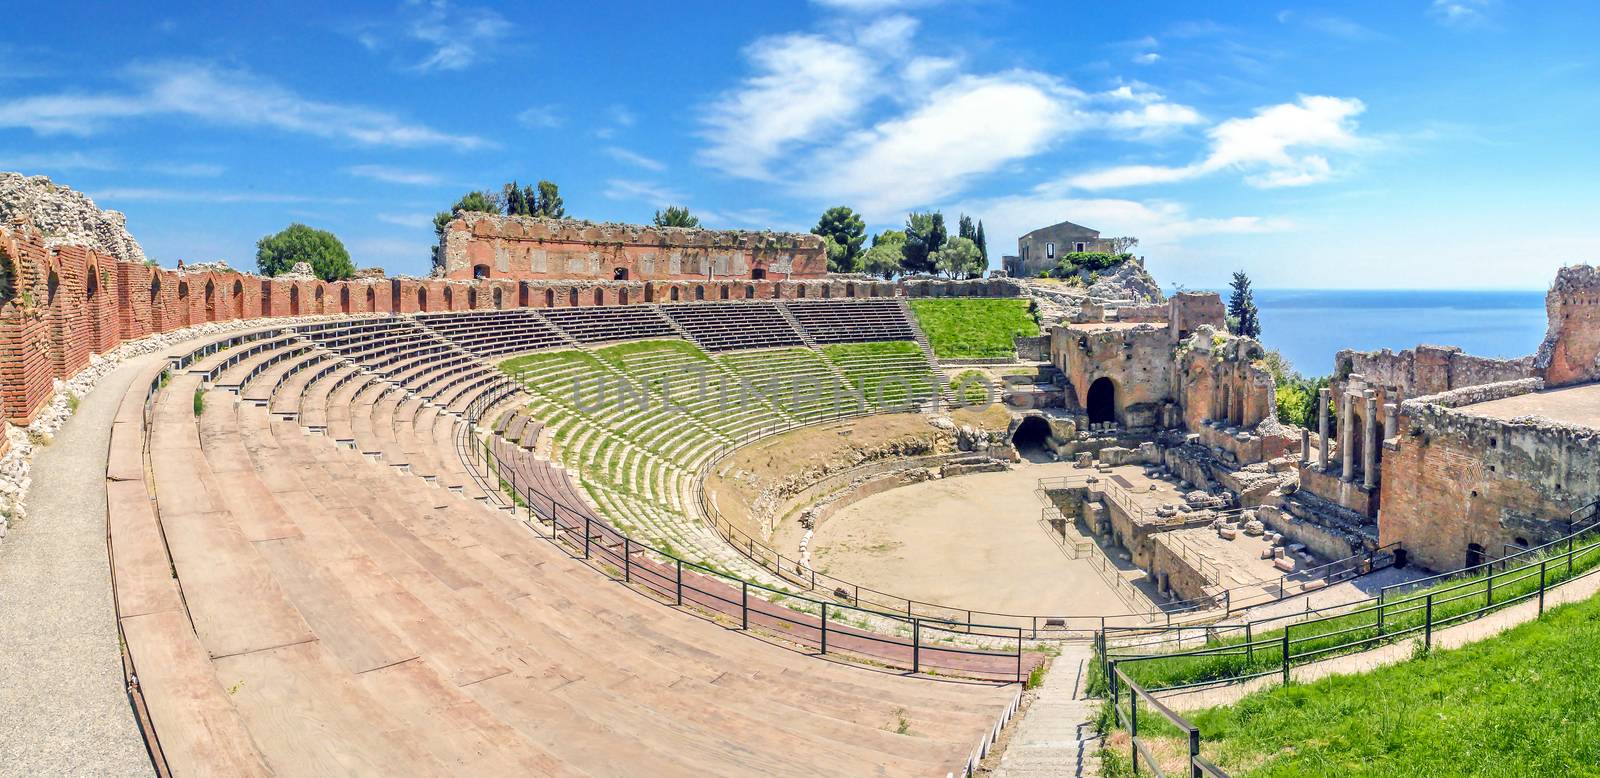 The ancient Greek Theater of Taormina in Sicily by rarrarorro